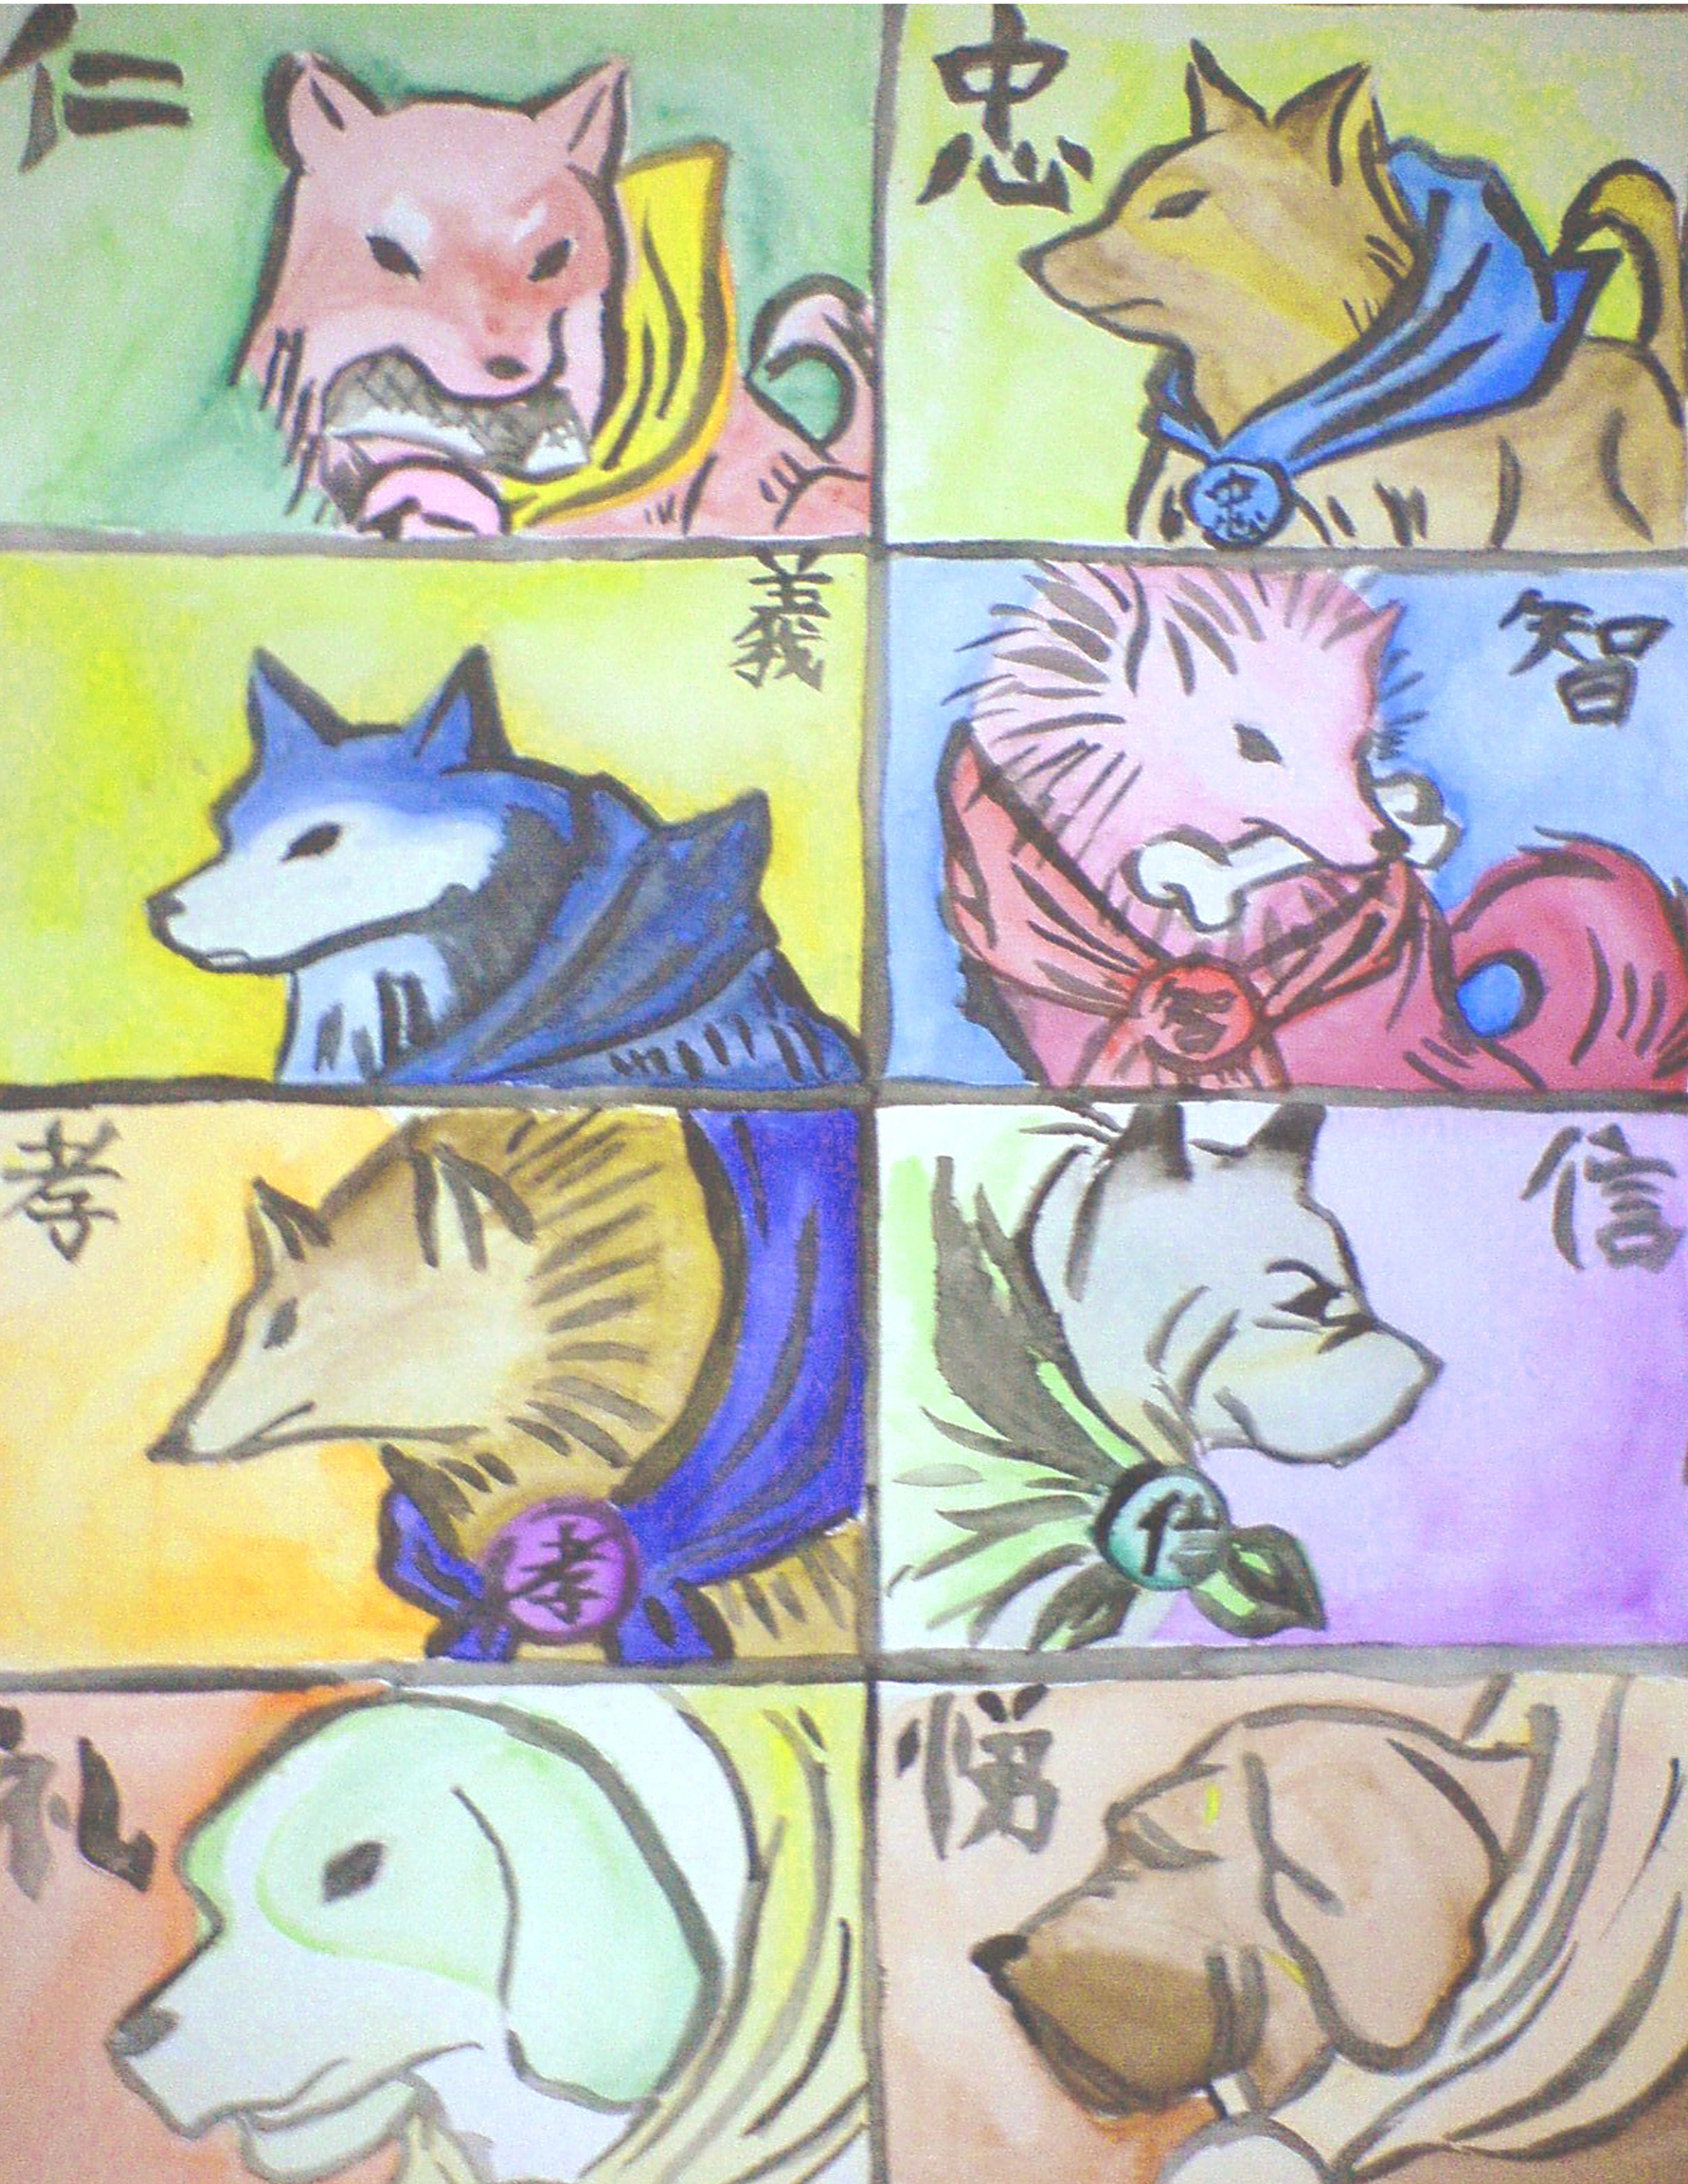 okami:canine warriors by pichinayu on DeviantArt